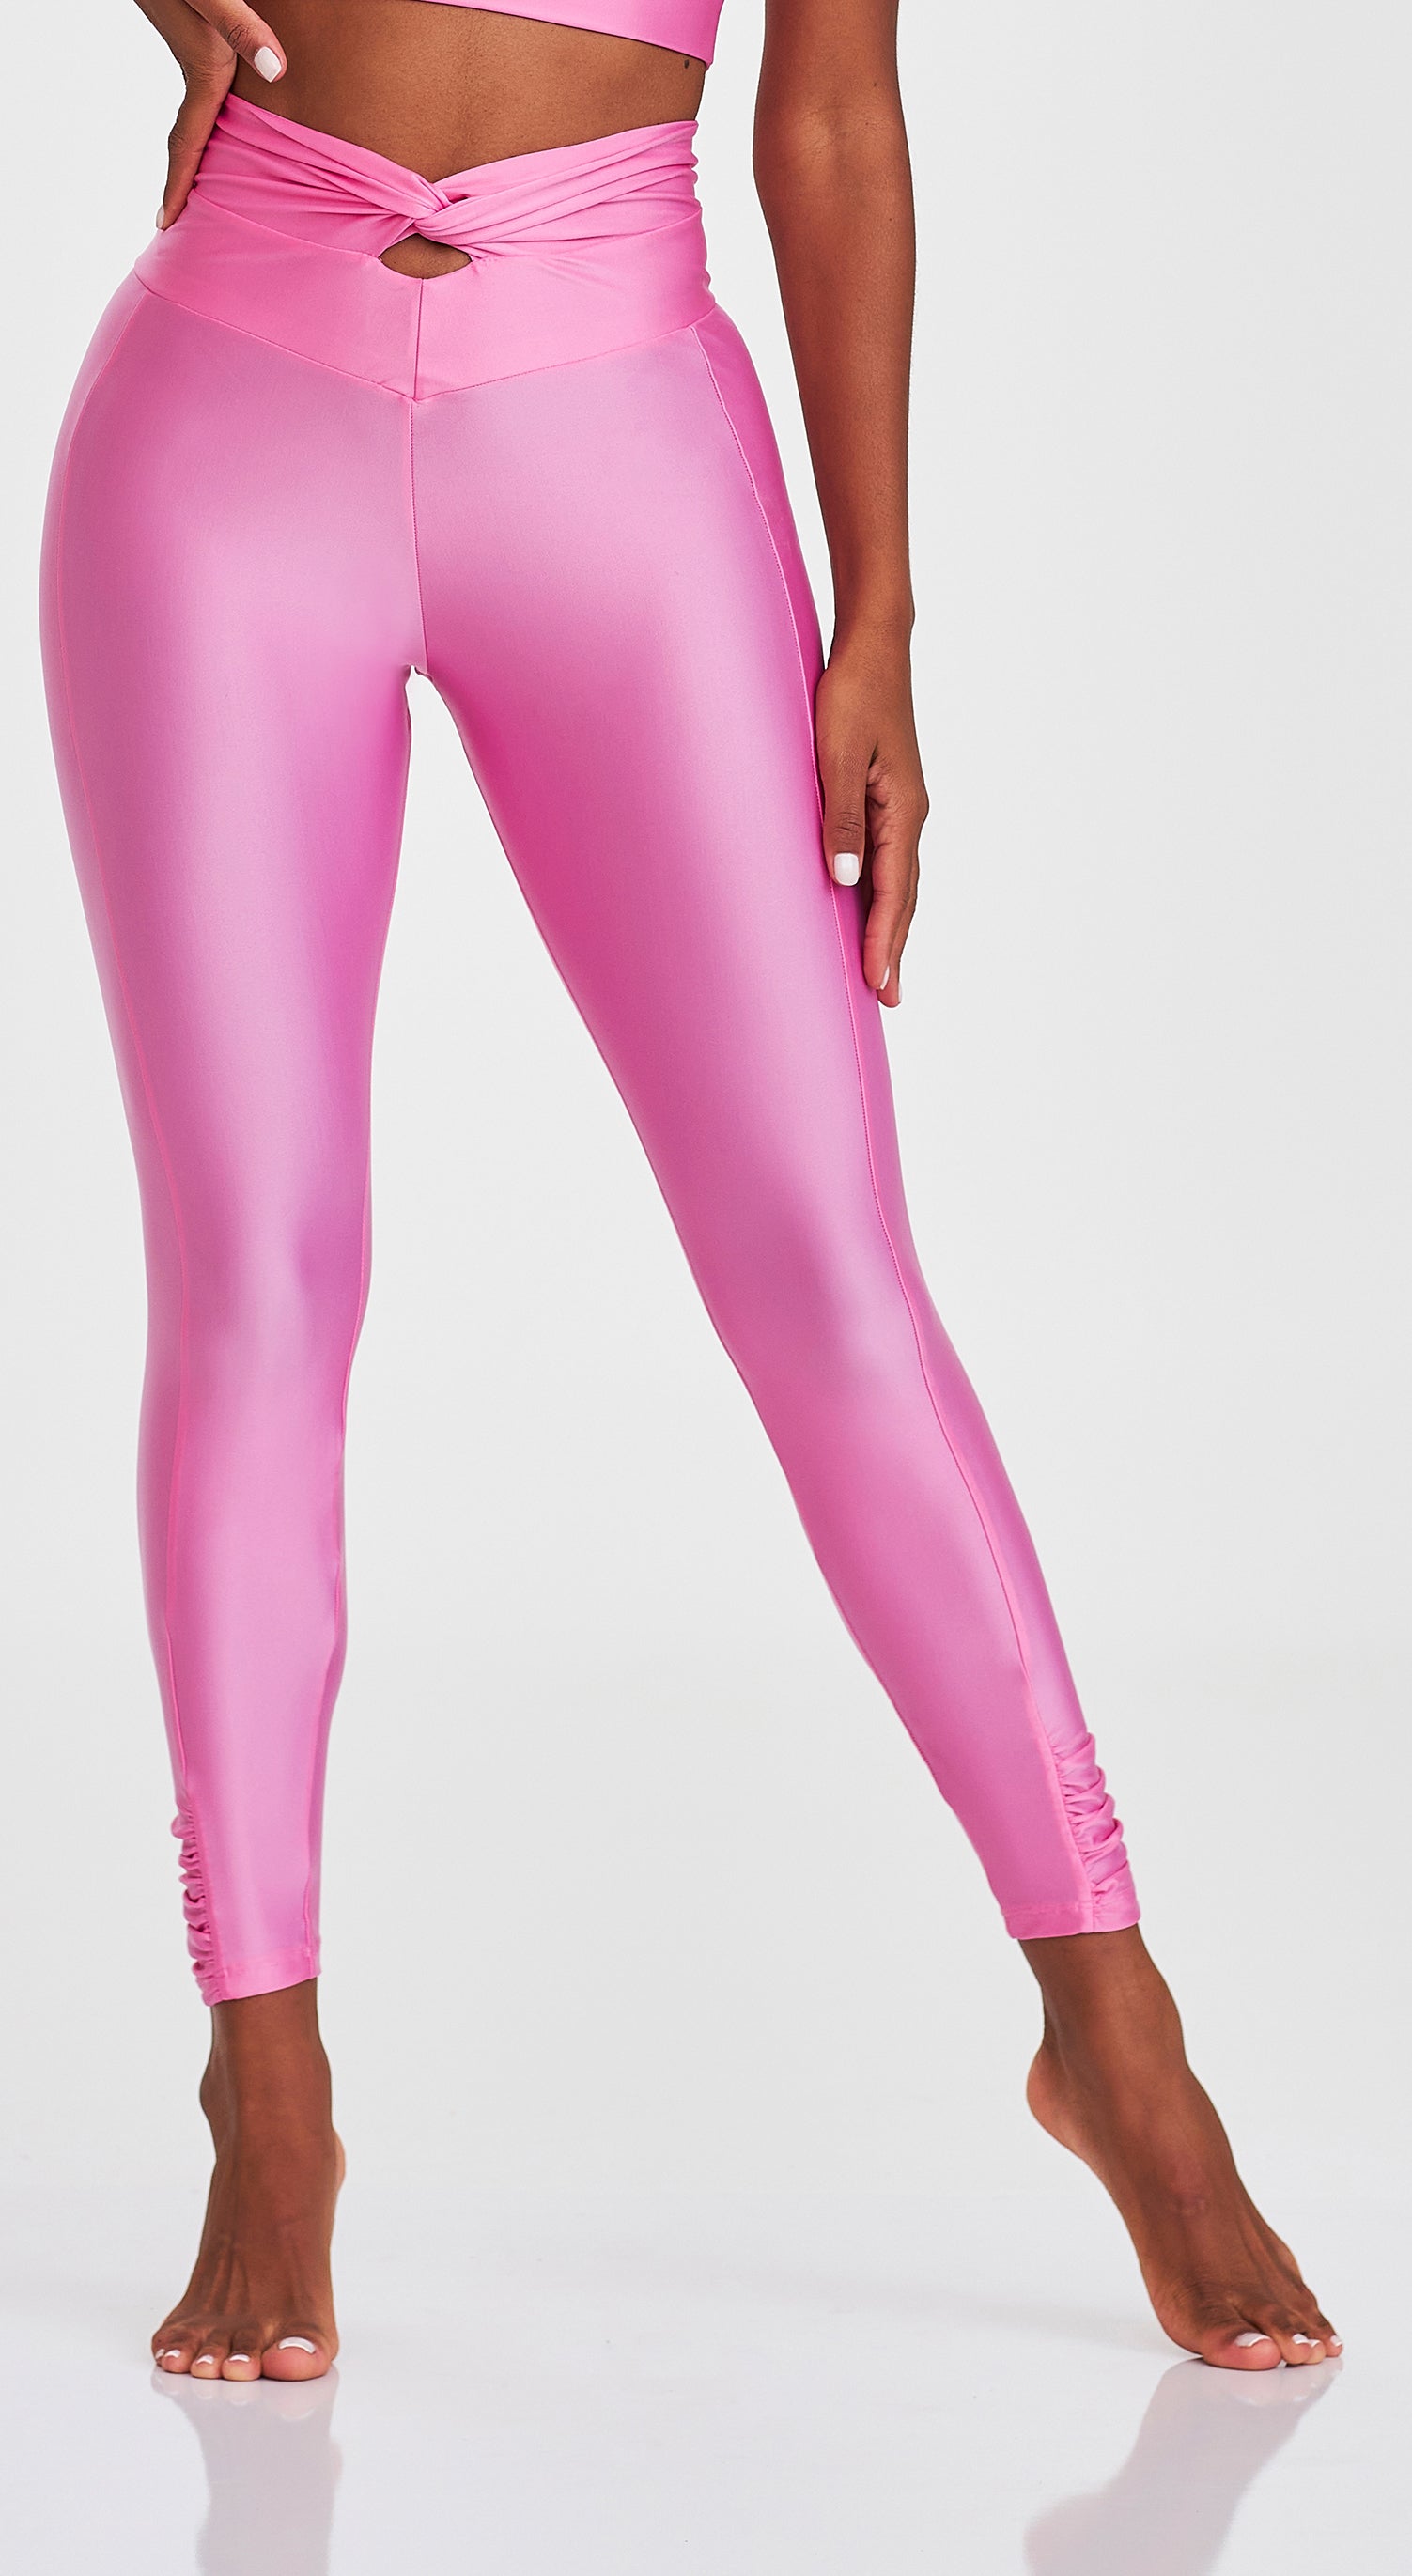 Atletika Scrunch Legging - Pink